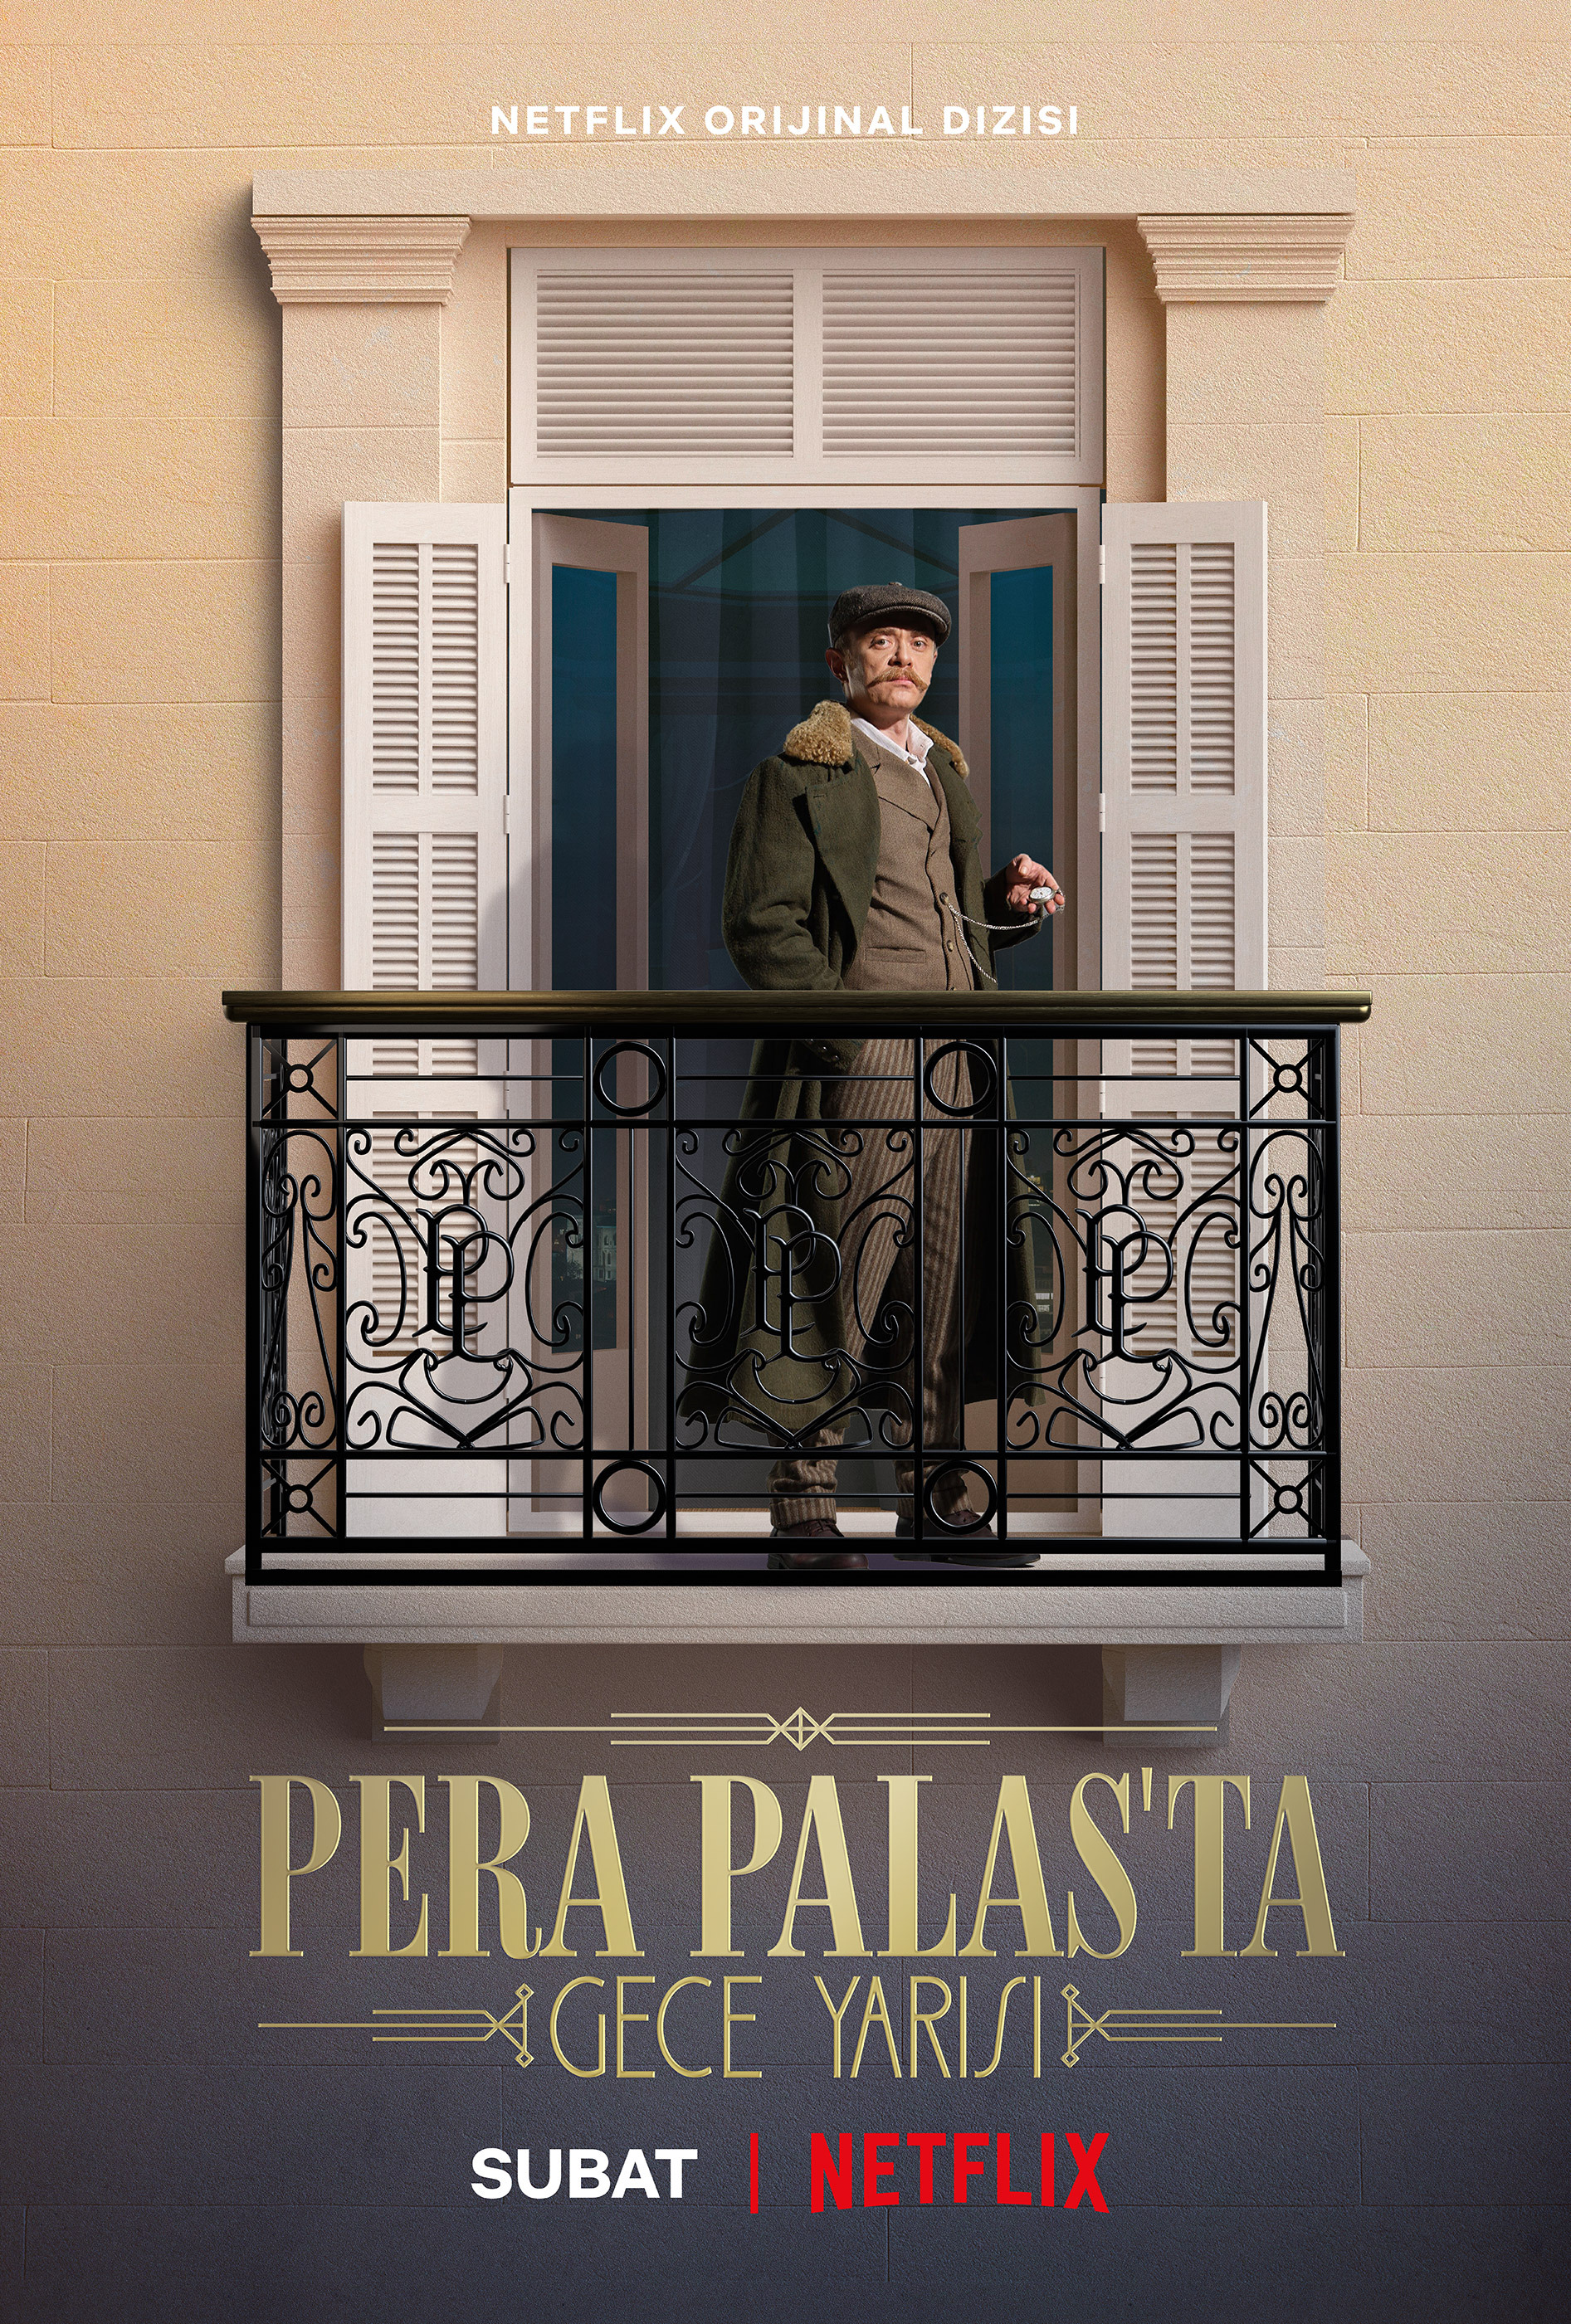 Mega Sized TV Poster Image for Pera Palas'ta Gece Yarisi (#4 of 10)